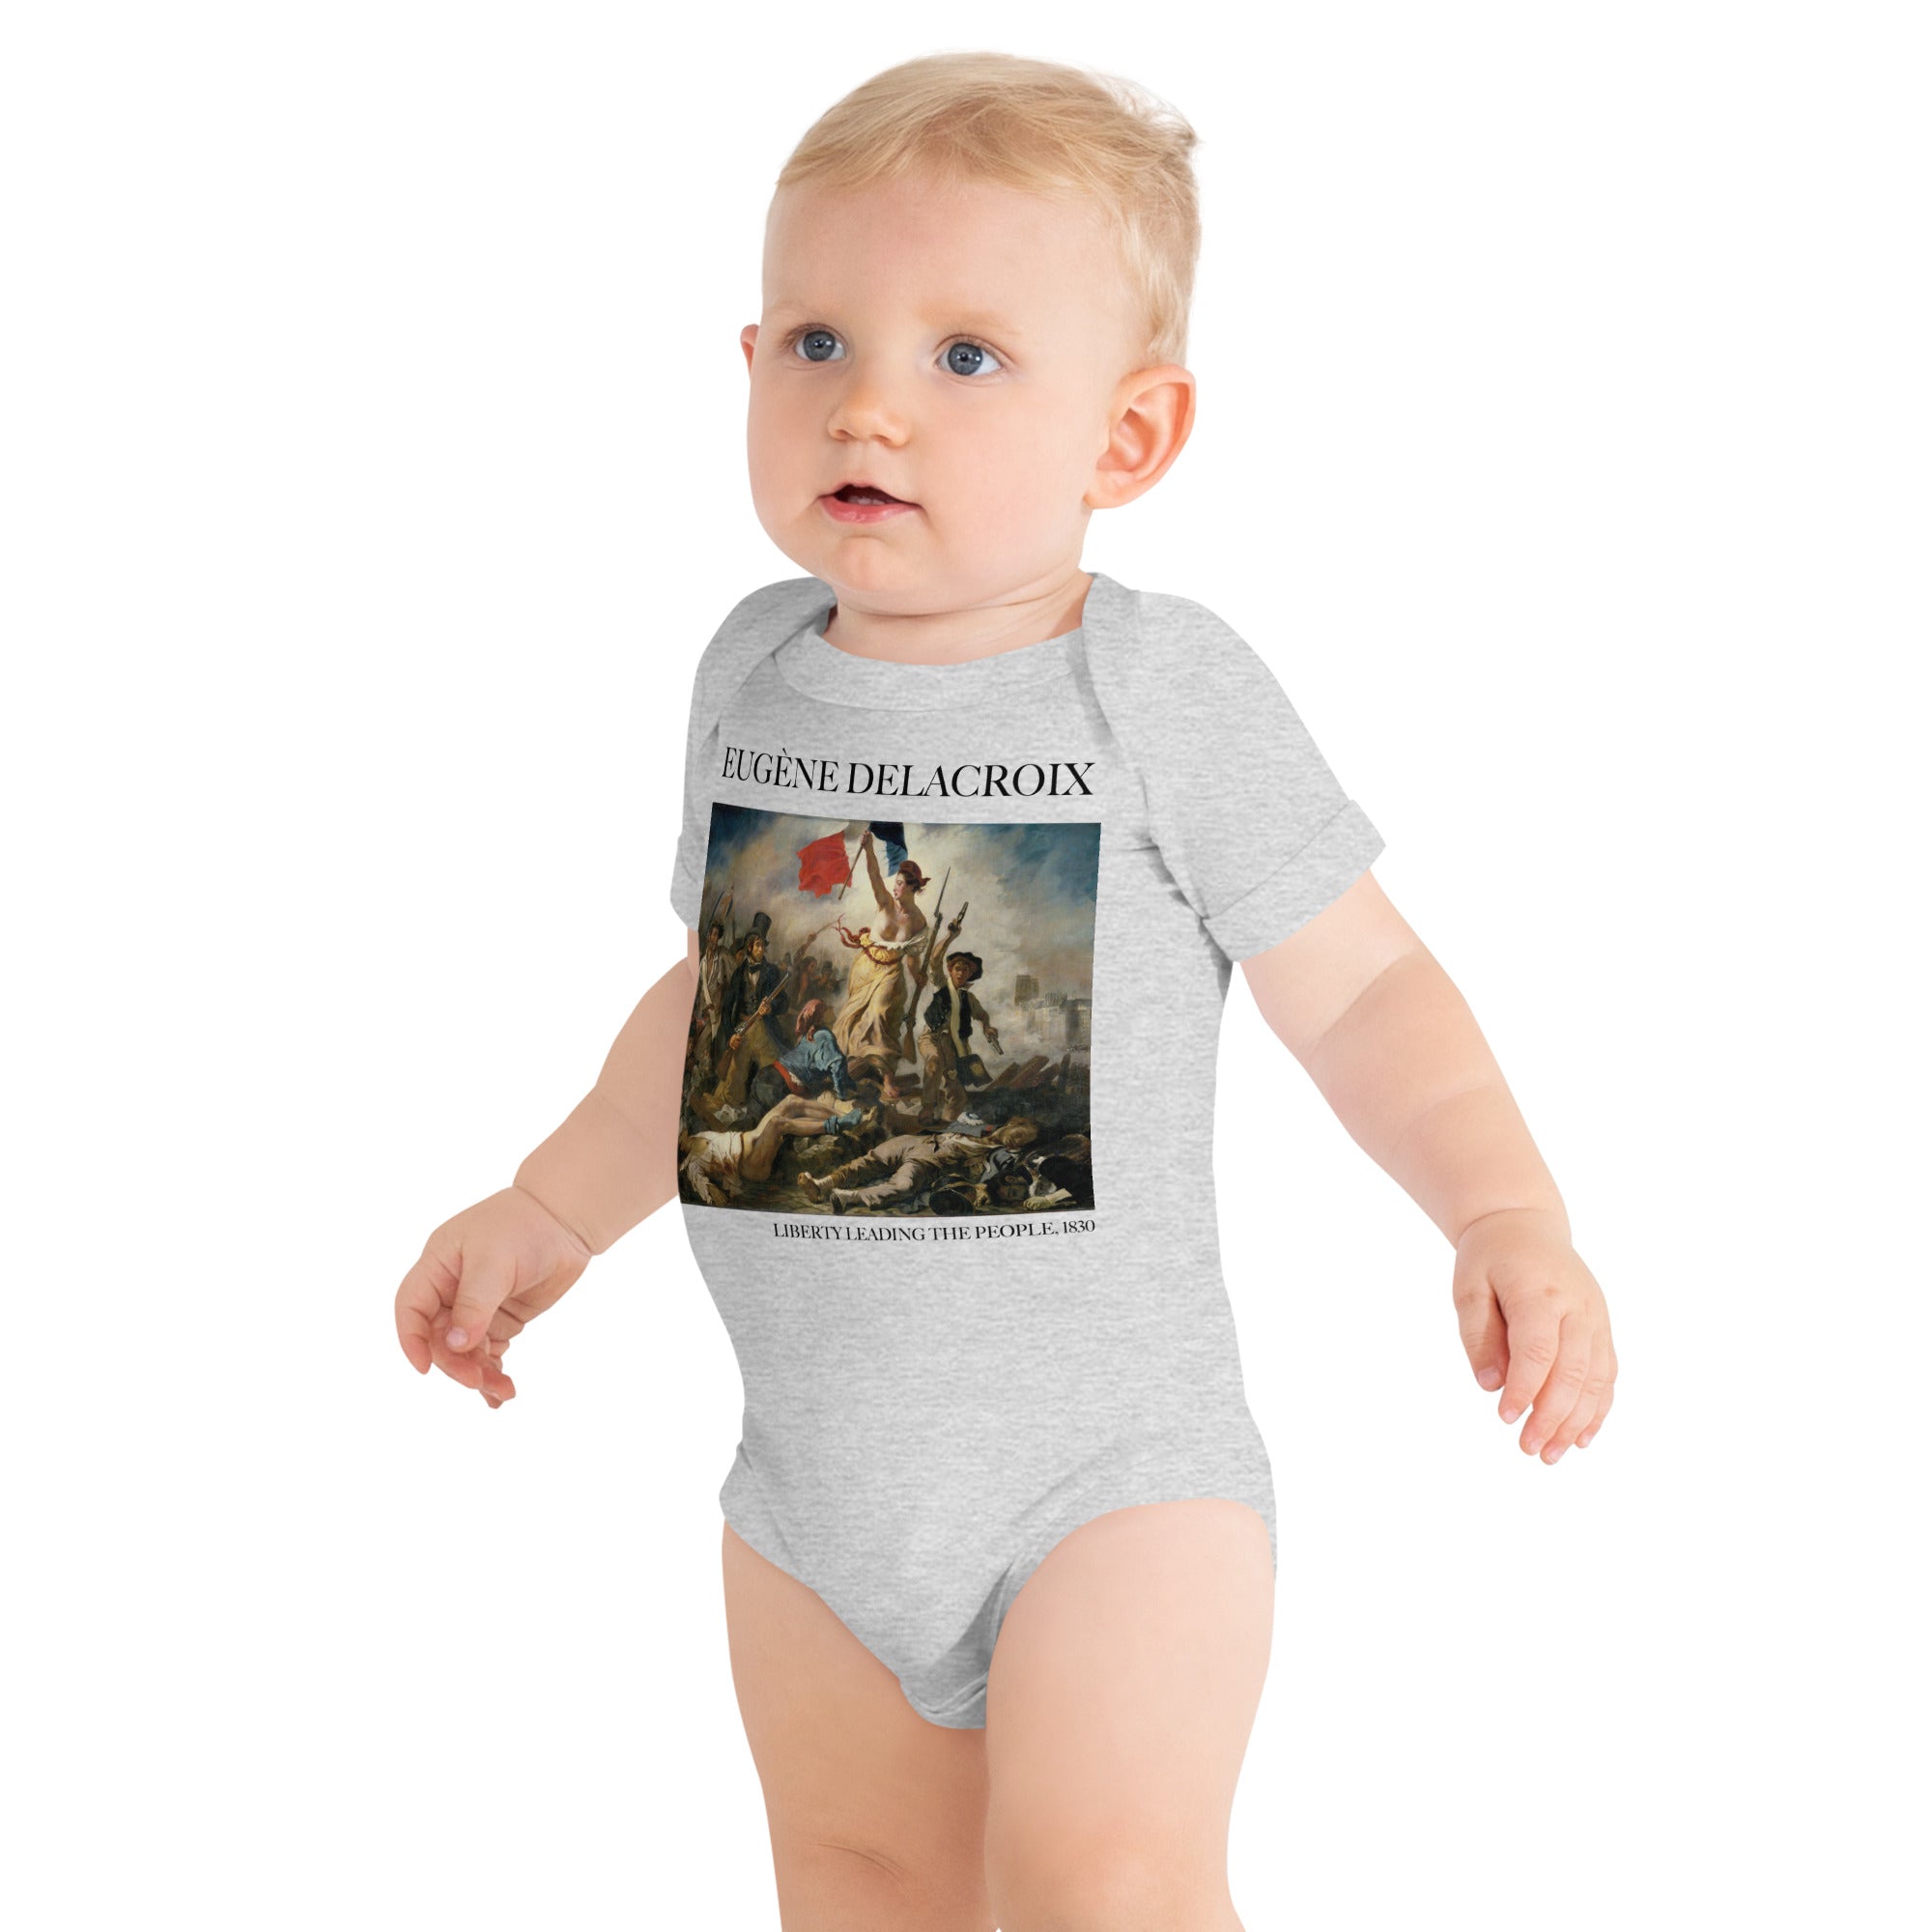 Eugène Delacroix 'Liberty Leading the People' Famous Painting Short Sleeve One Piece | Premium Baby Art One Sleeve